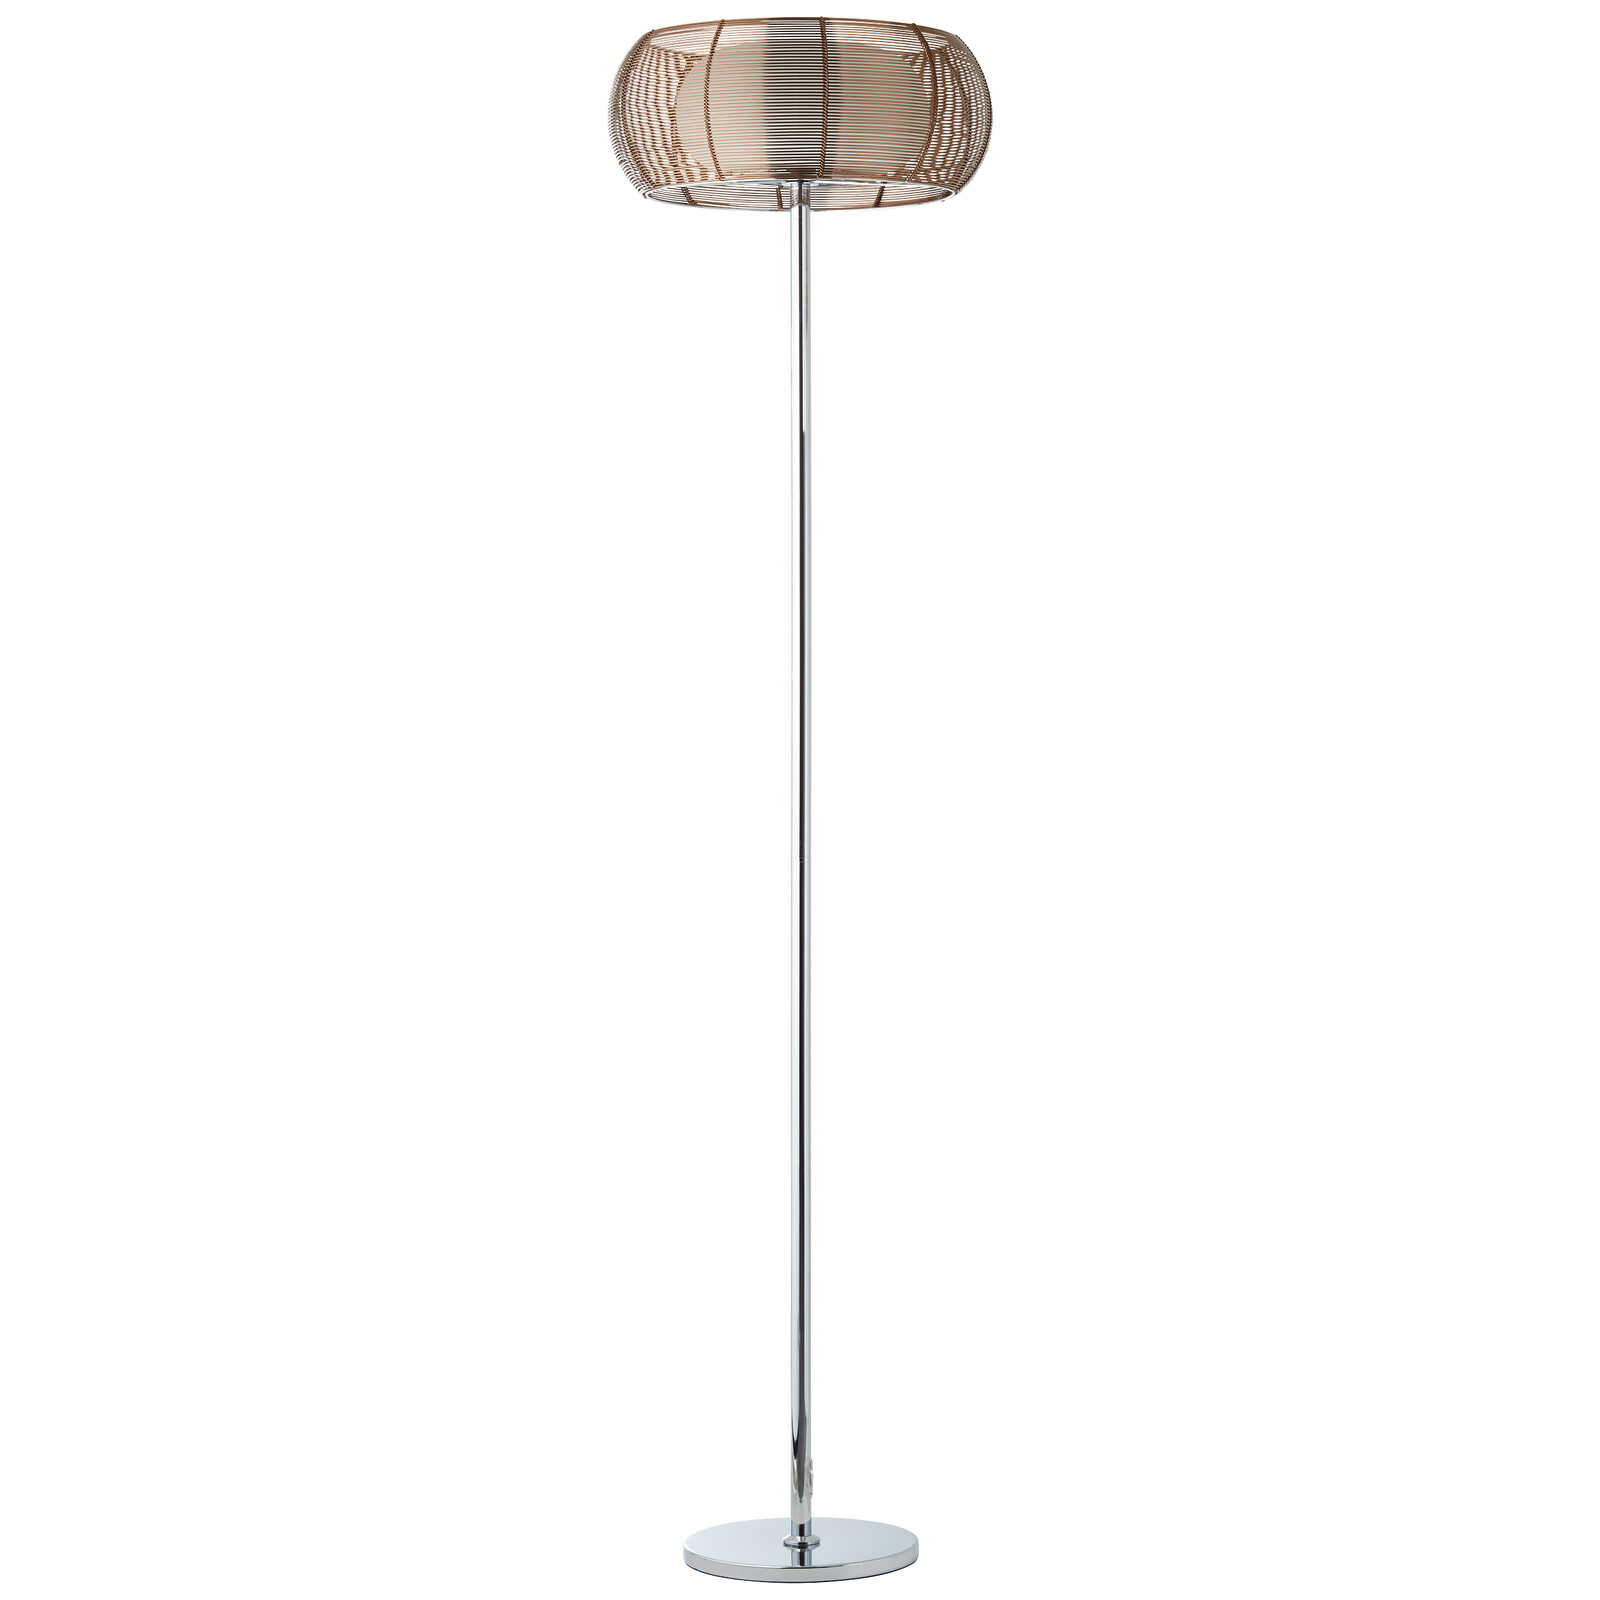             Lámpara de pie de cristal - Maxime 11 - Marrón
        